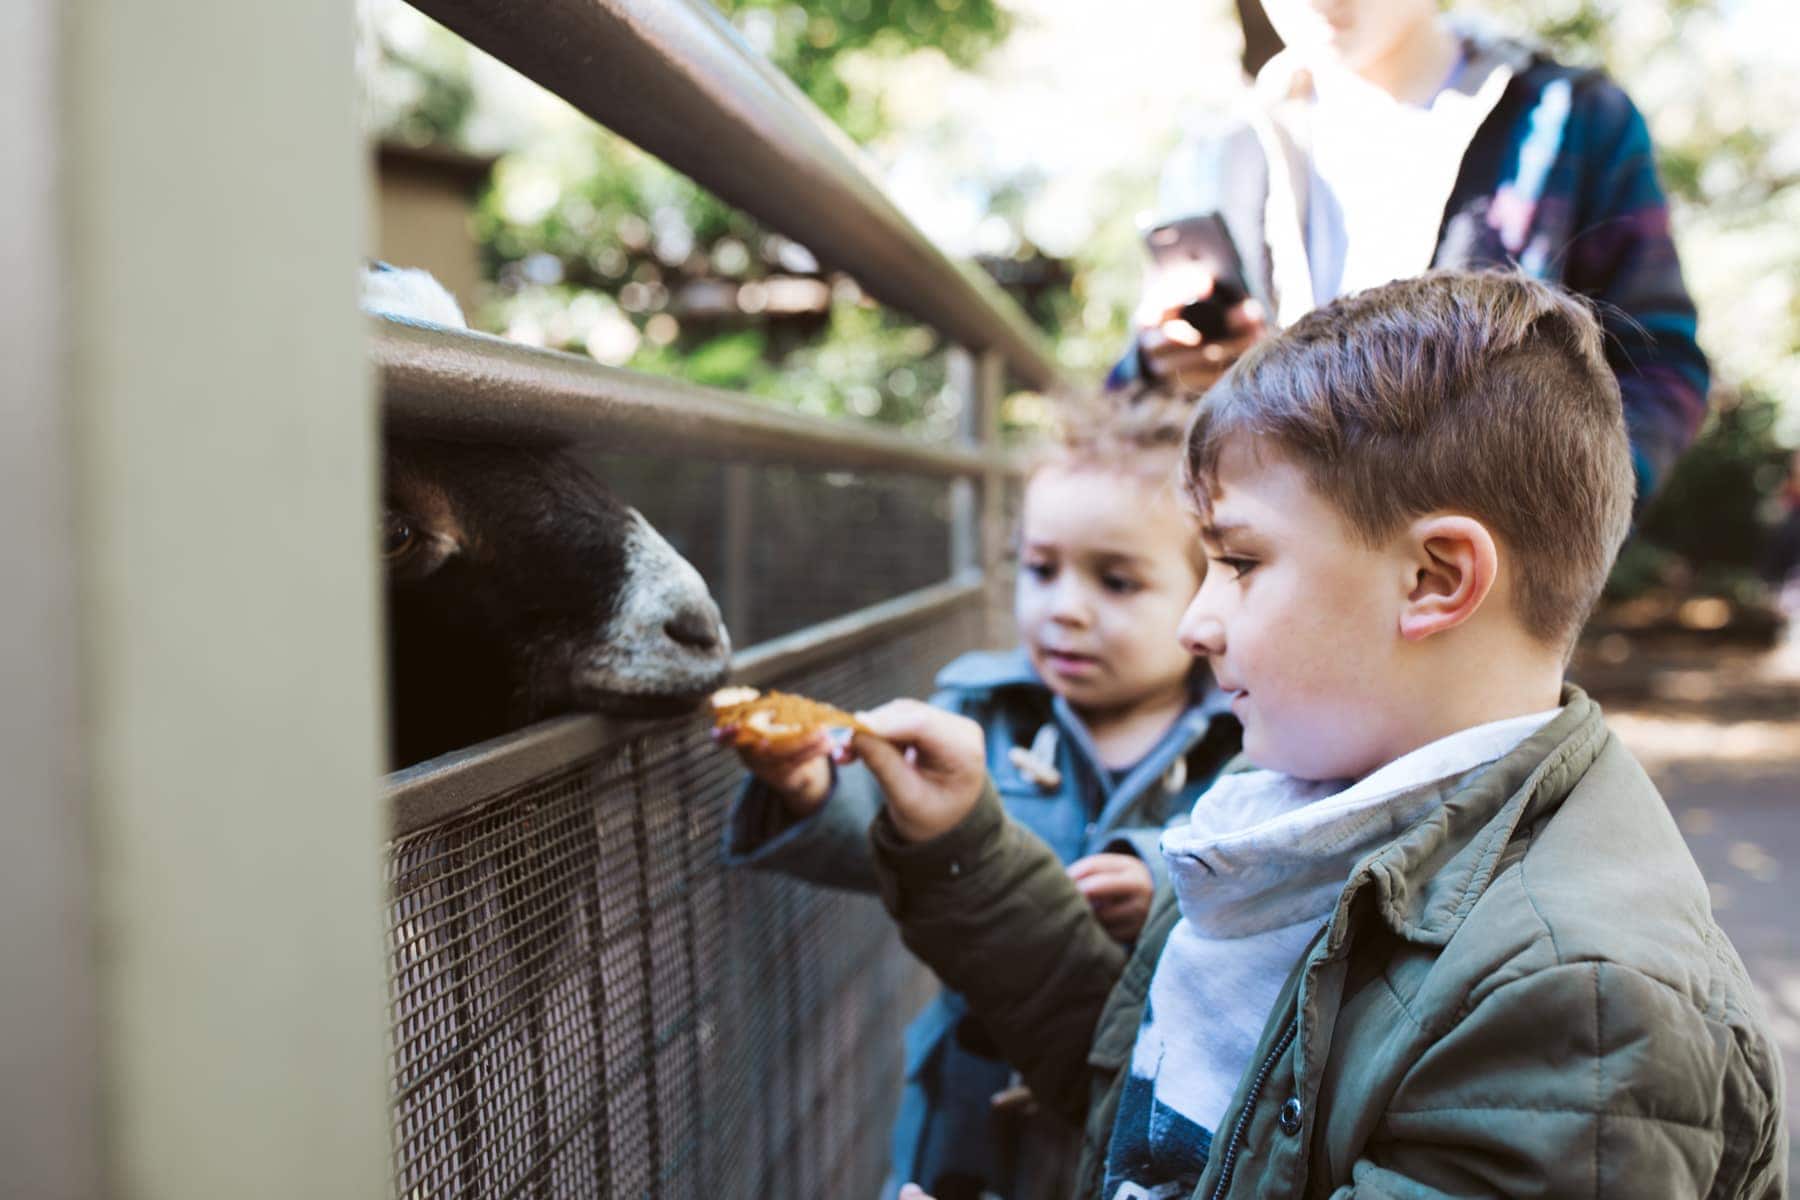 Central Park Zoo Feeding Goats